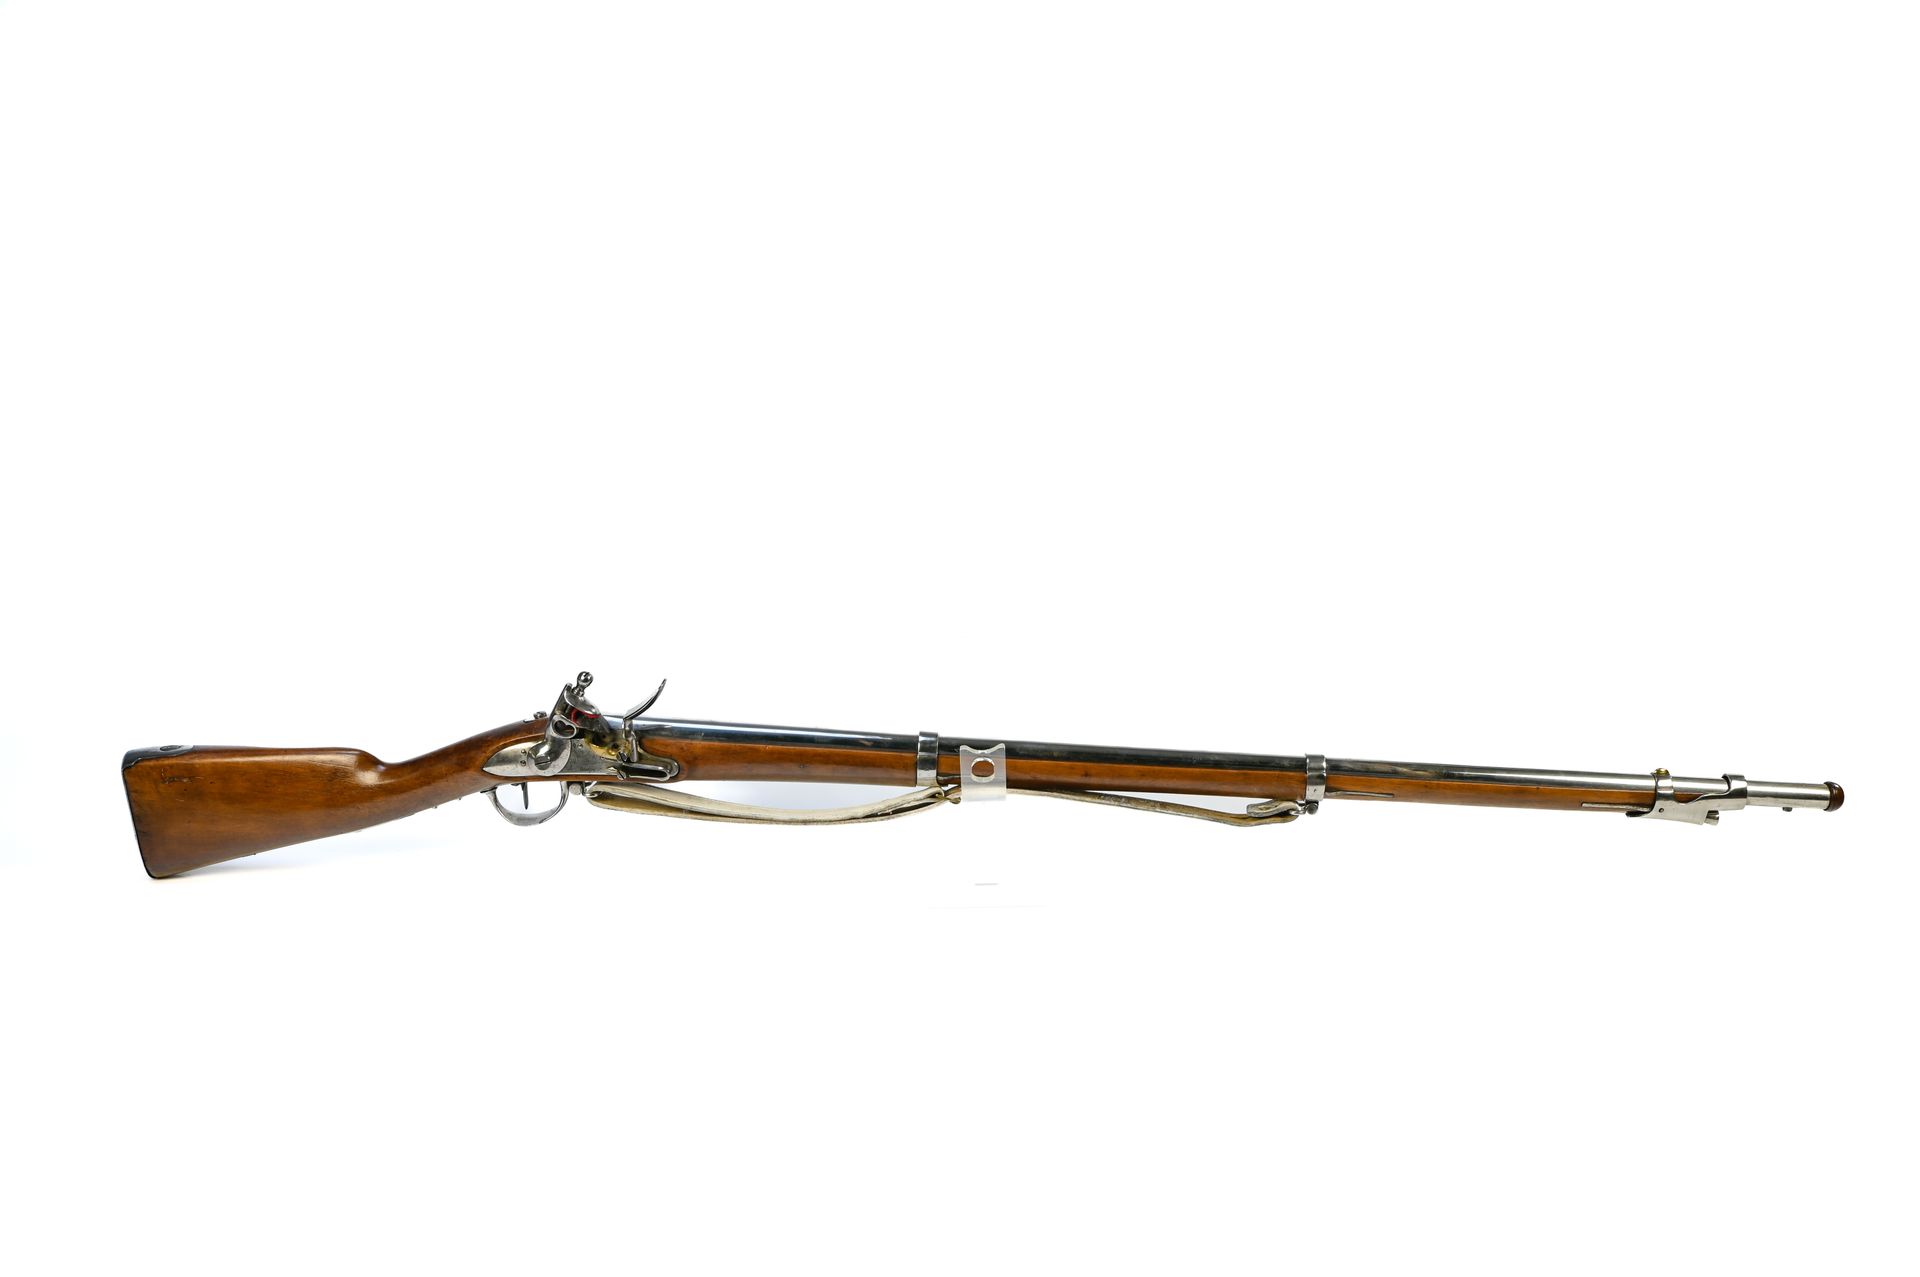 MANUFACTURE ROYALE DE MÜTZIG 年份 1810年

皇家Mützig工厂

步兵步枪



圆形，雷鸣般的枪管，日期为 "181-"，&hellip;